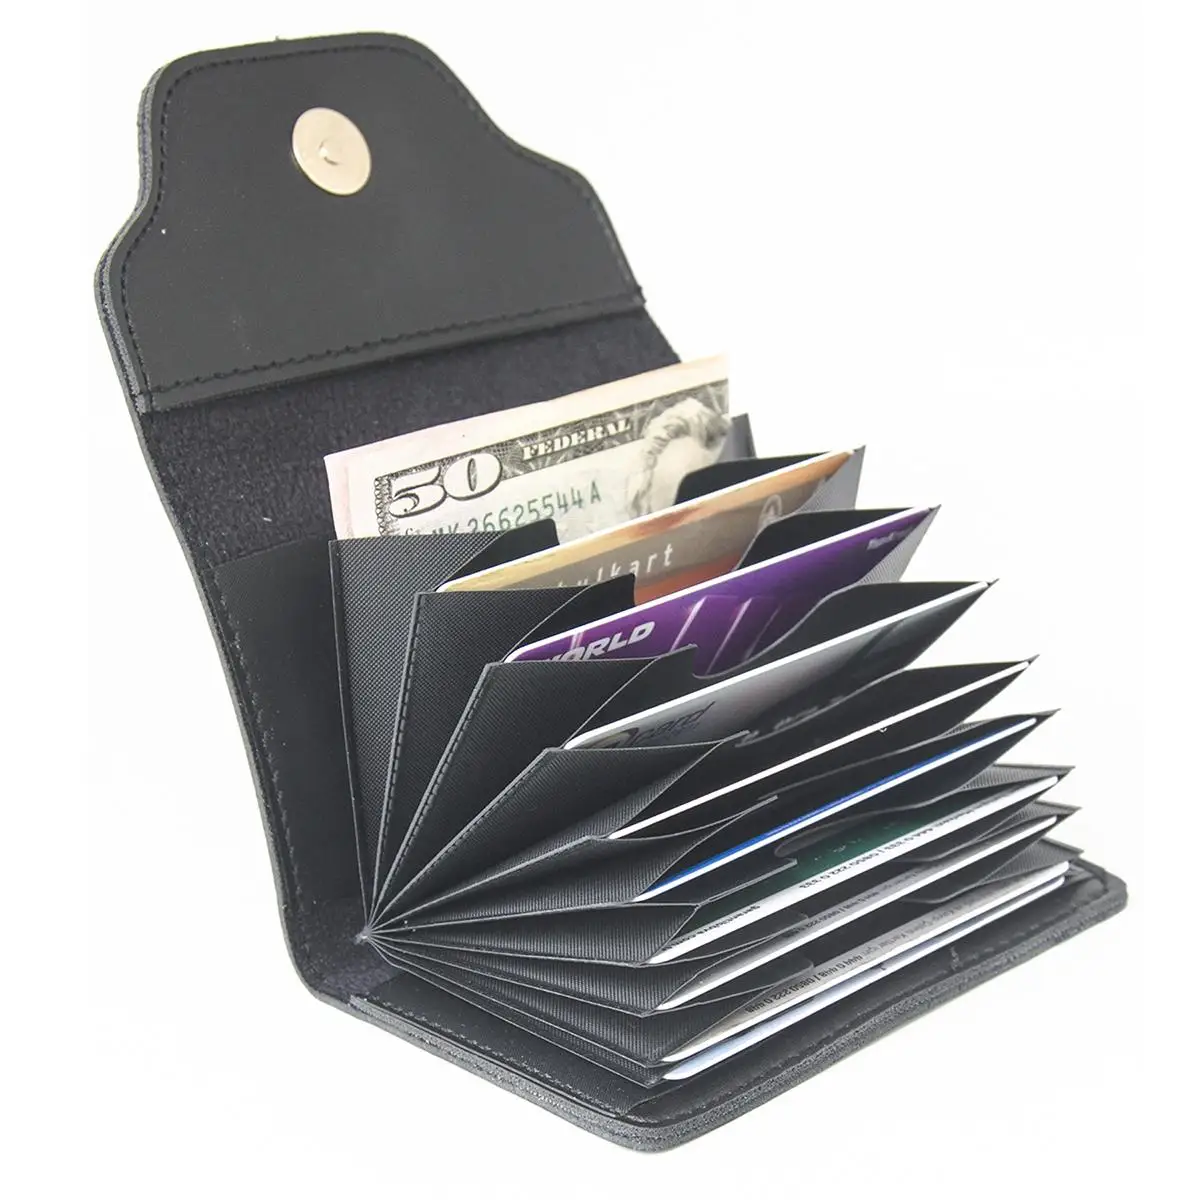 

Lederax Soft Pu Leather Men & Women Credit Card Holder Accordion Business Card Bag Unisex ID Card Wallet